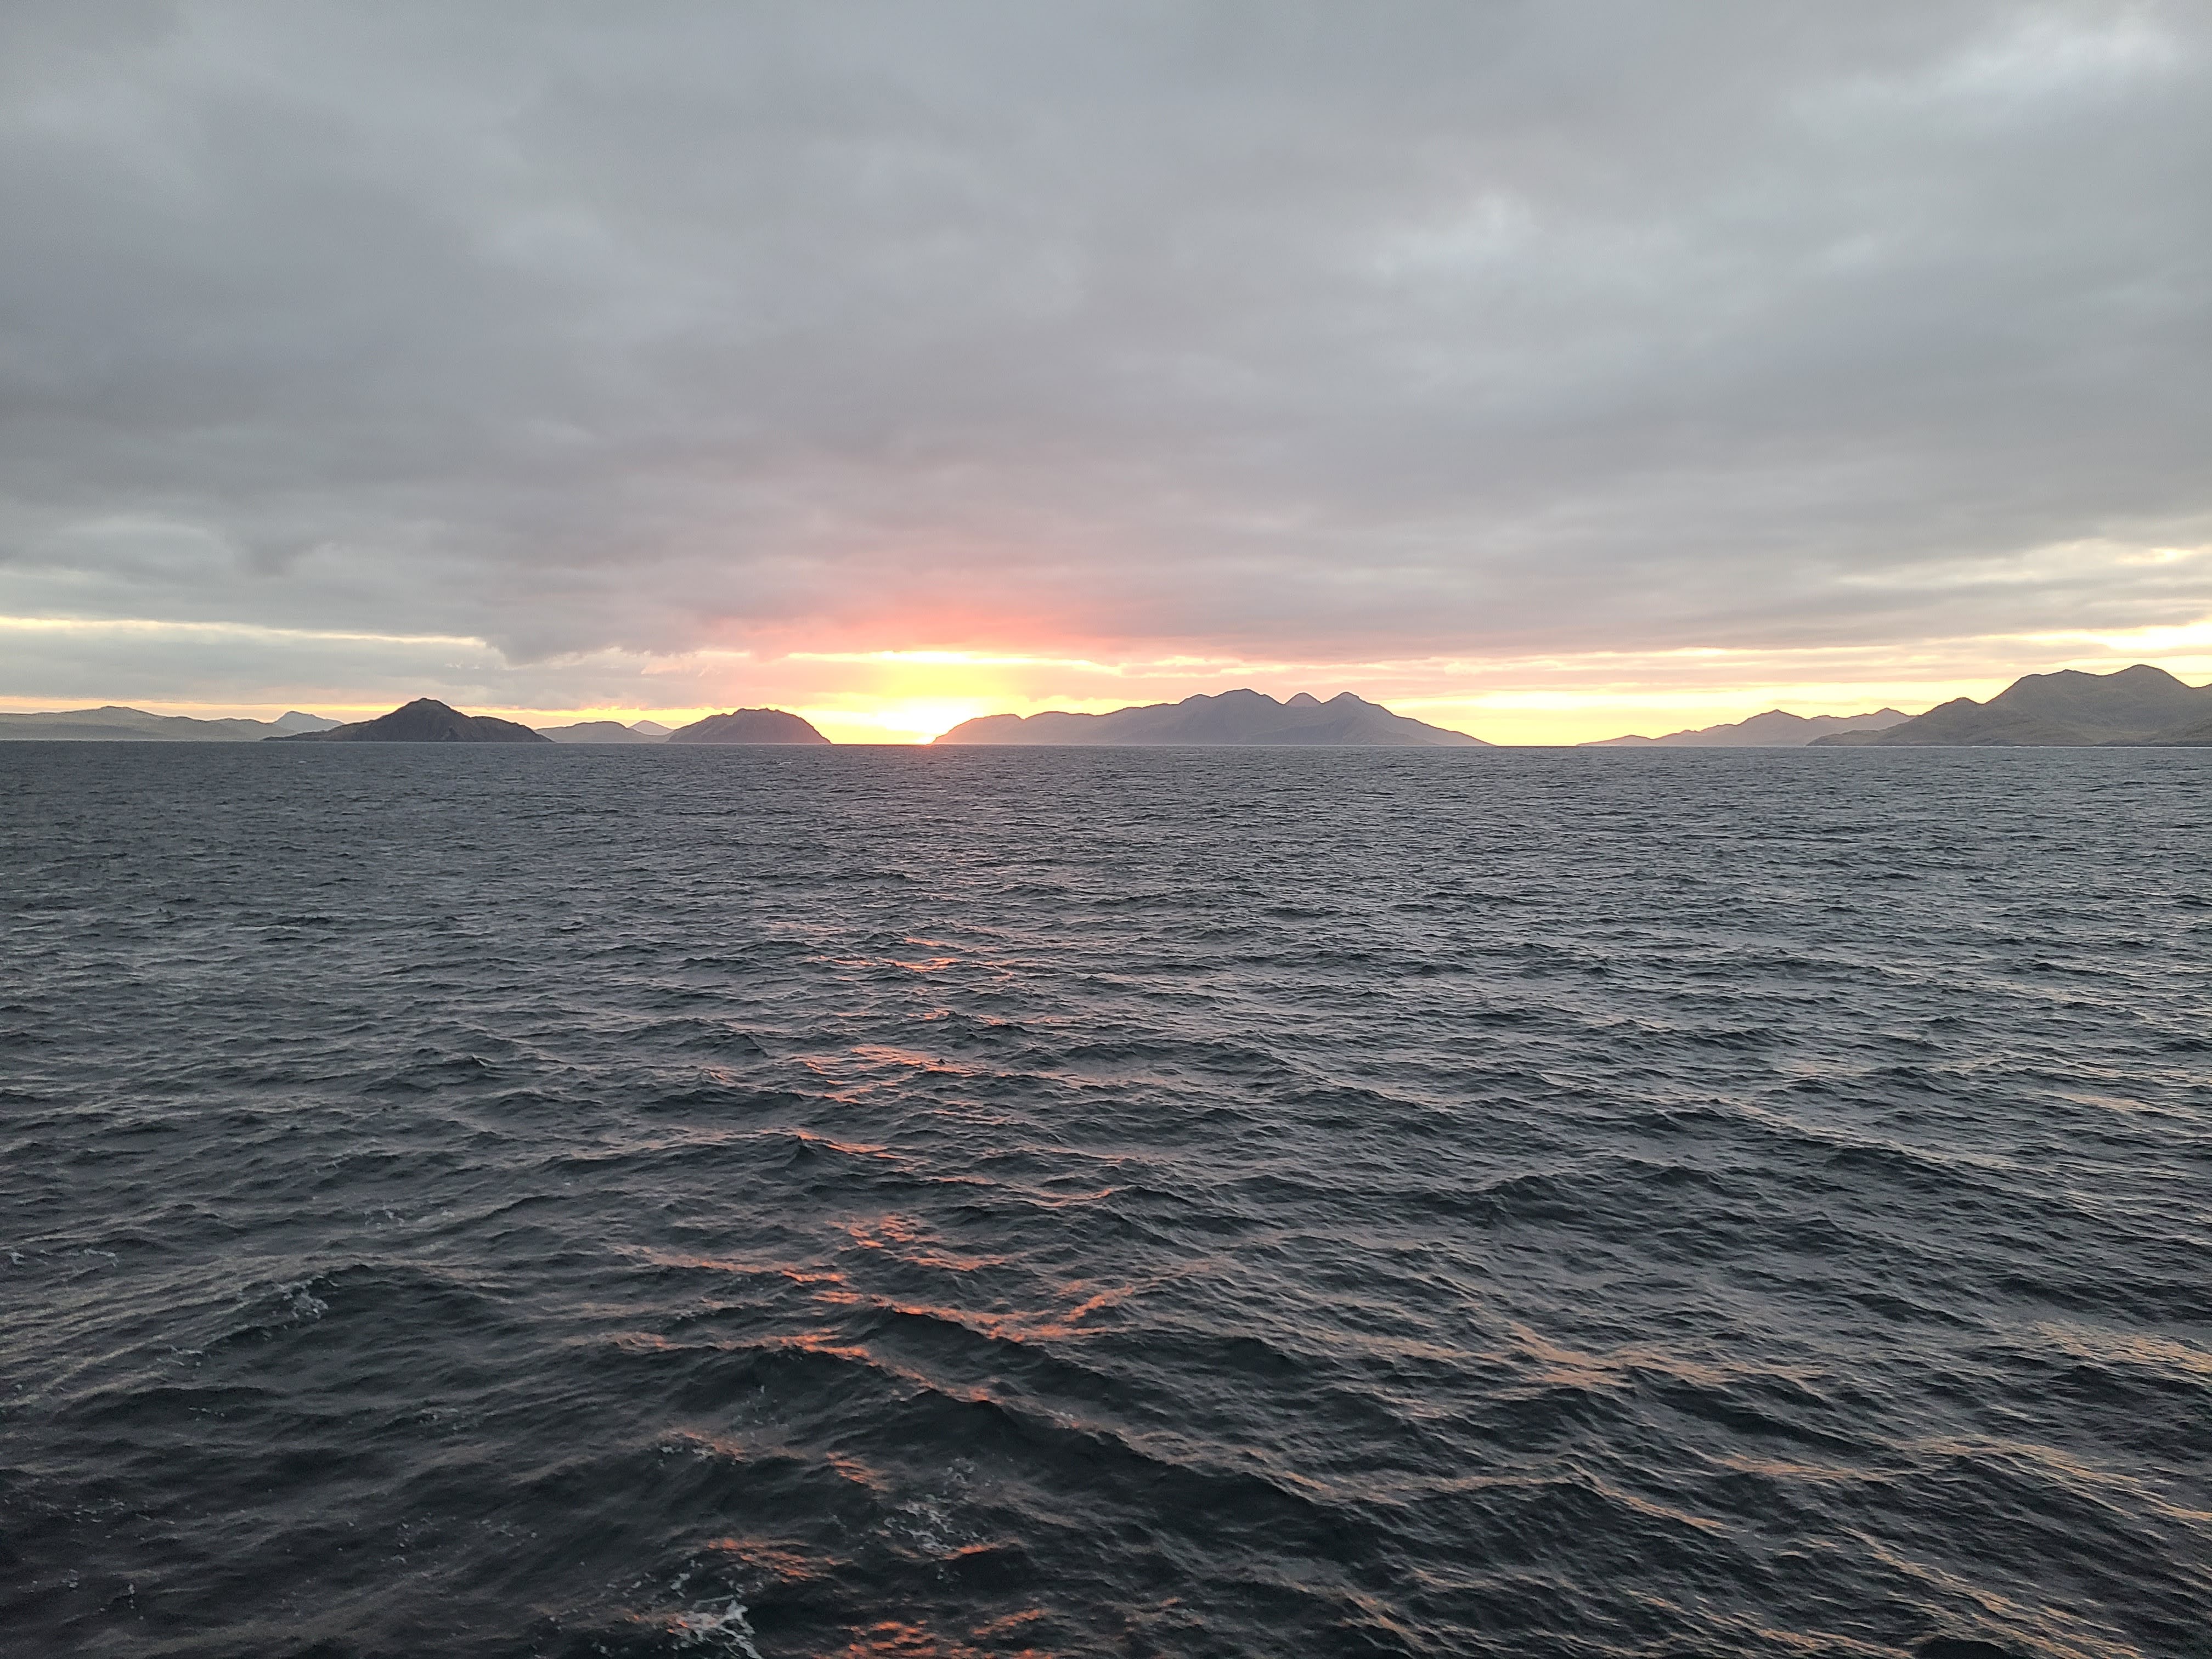 Adak island at sunrise